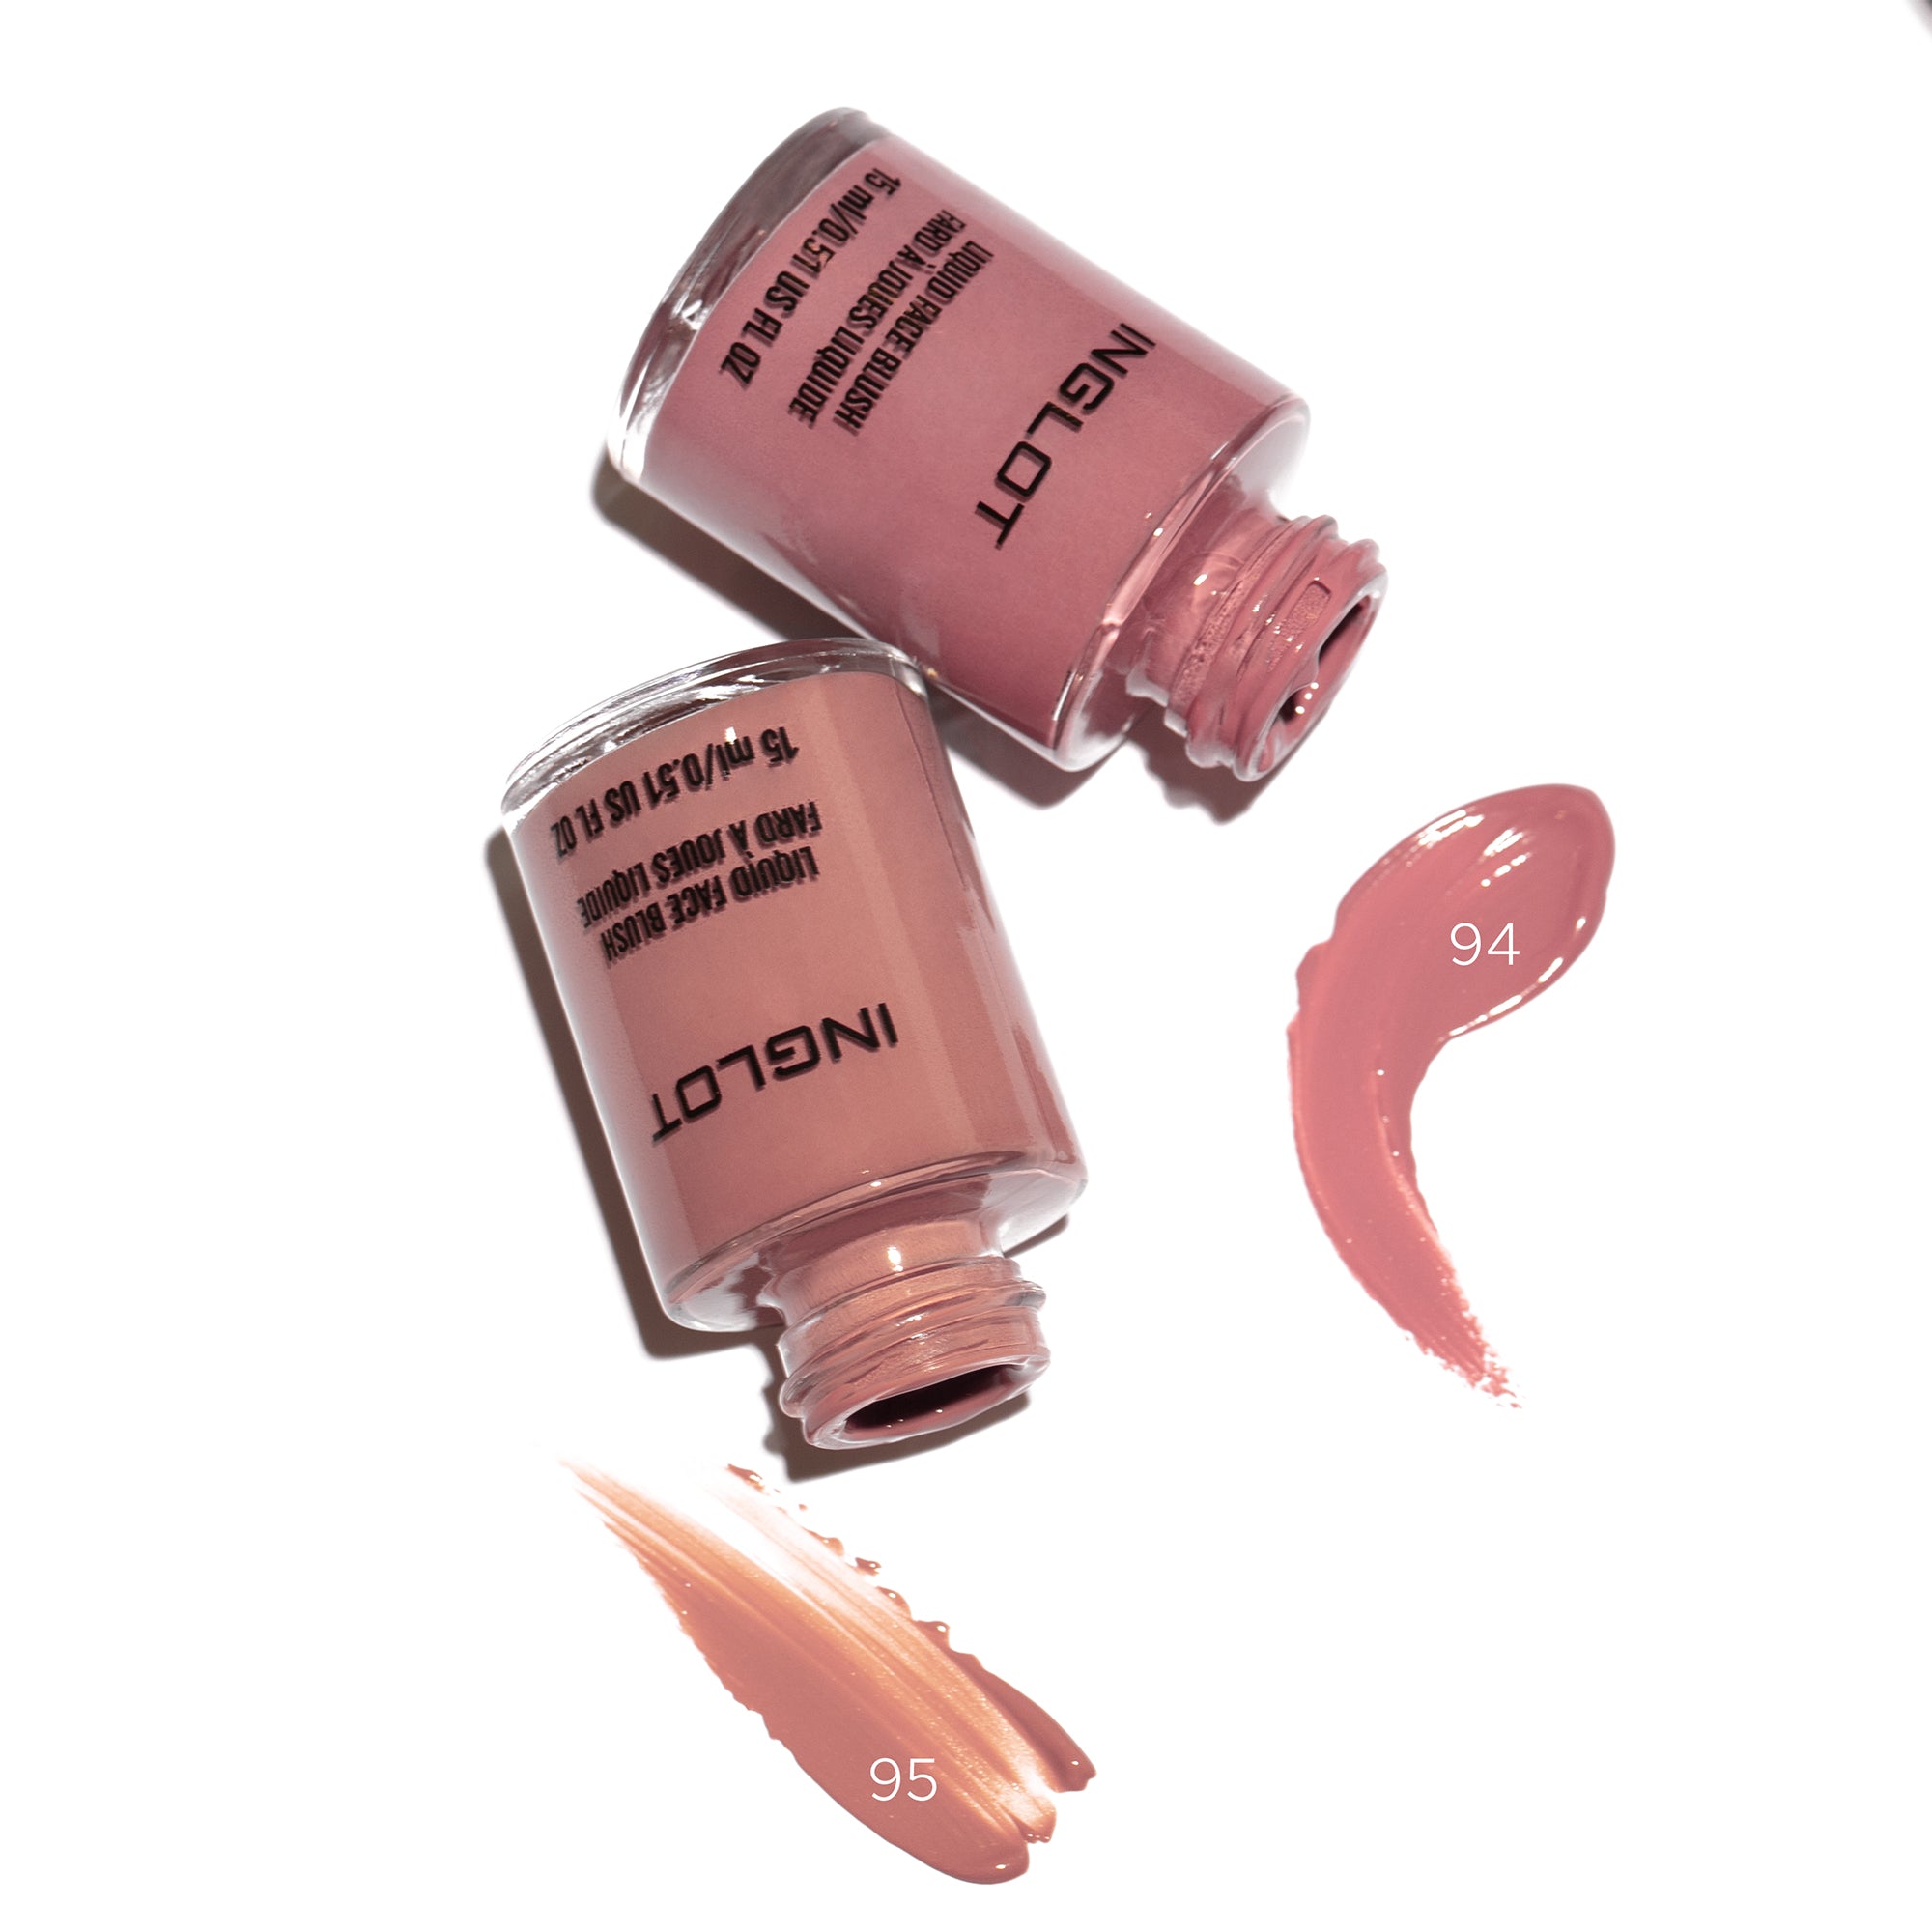 Liquid Face Blush 95 - INGLOT Cosmetics